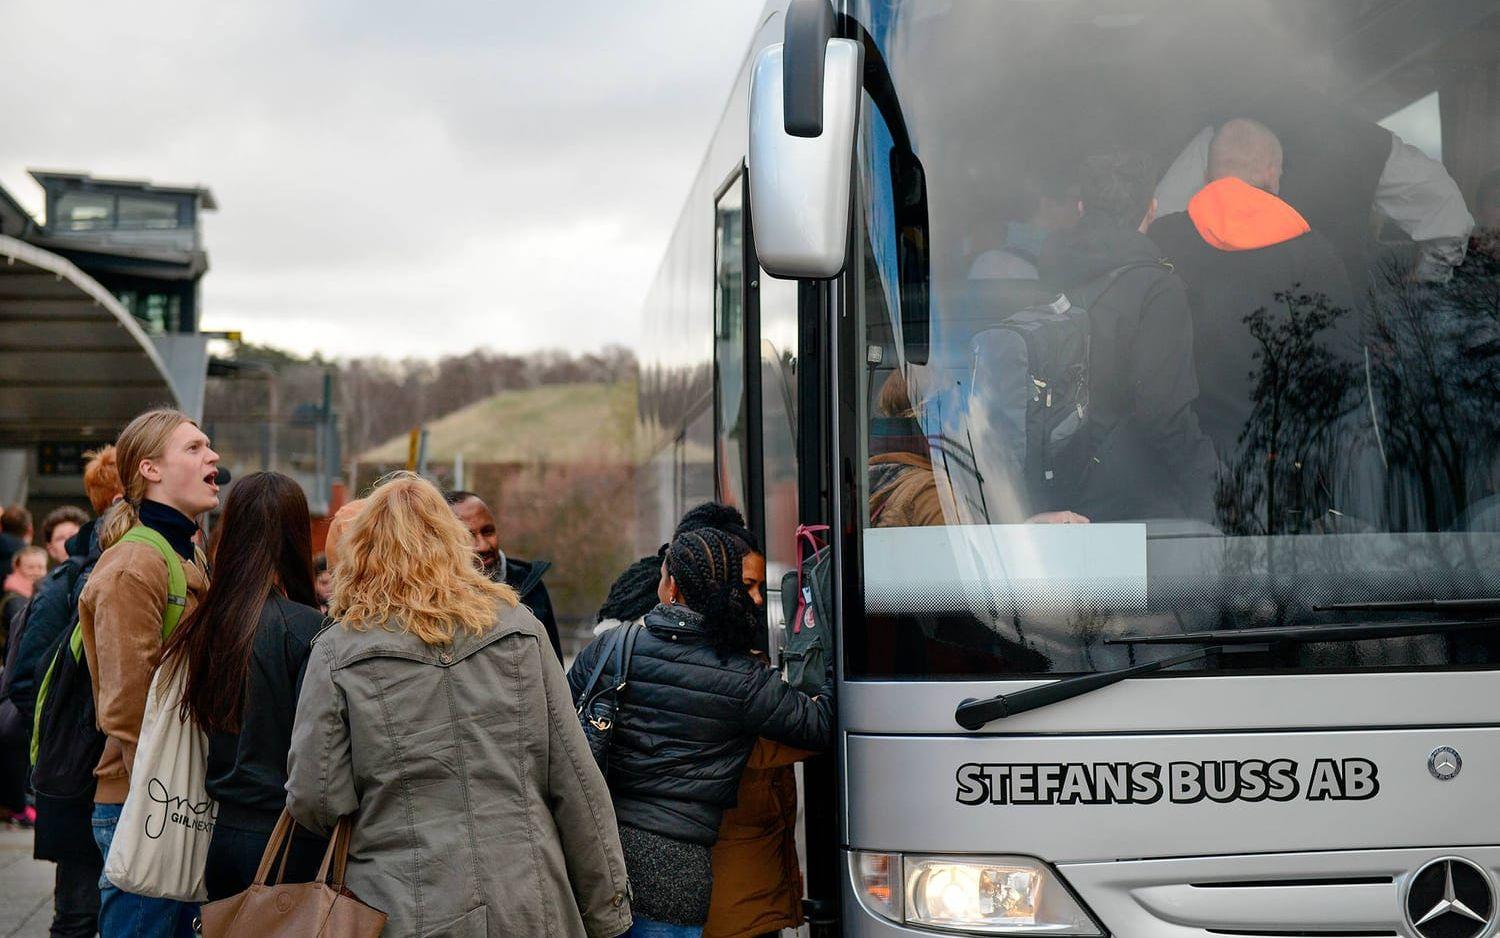 Bussen har destination Halmstad. Foto: Åsa Lindqvist